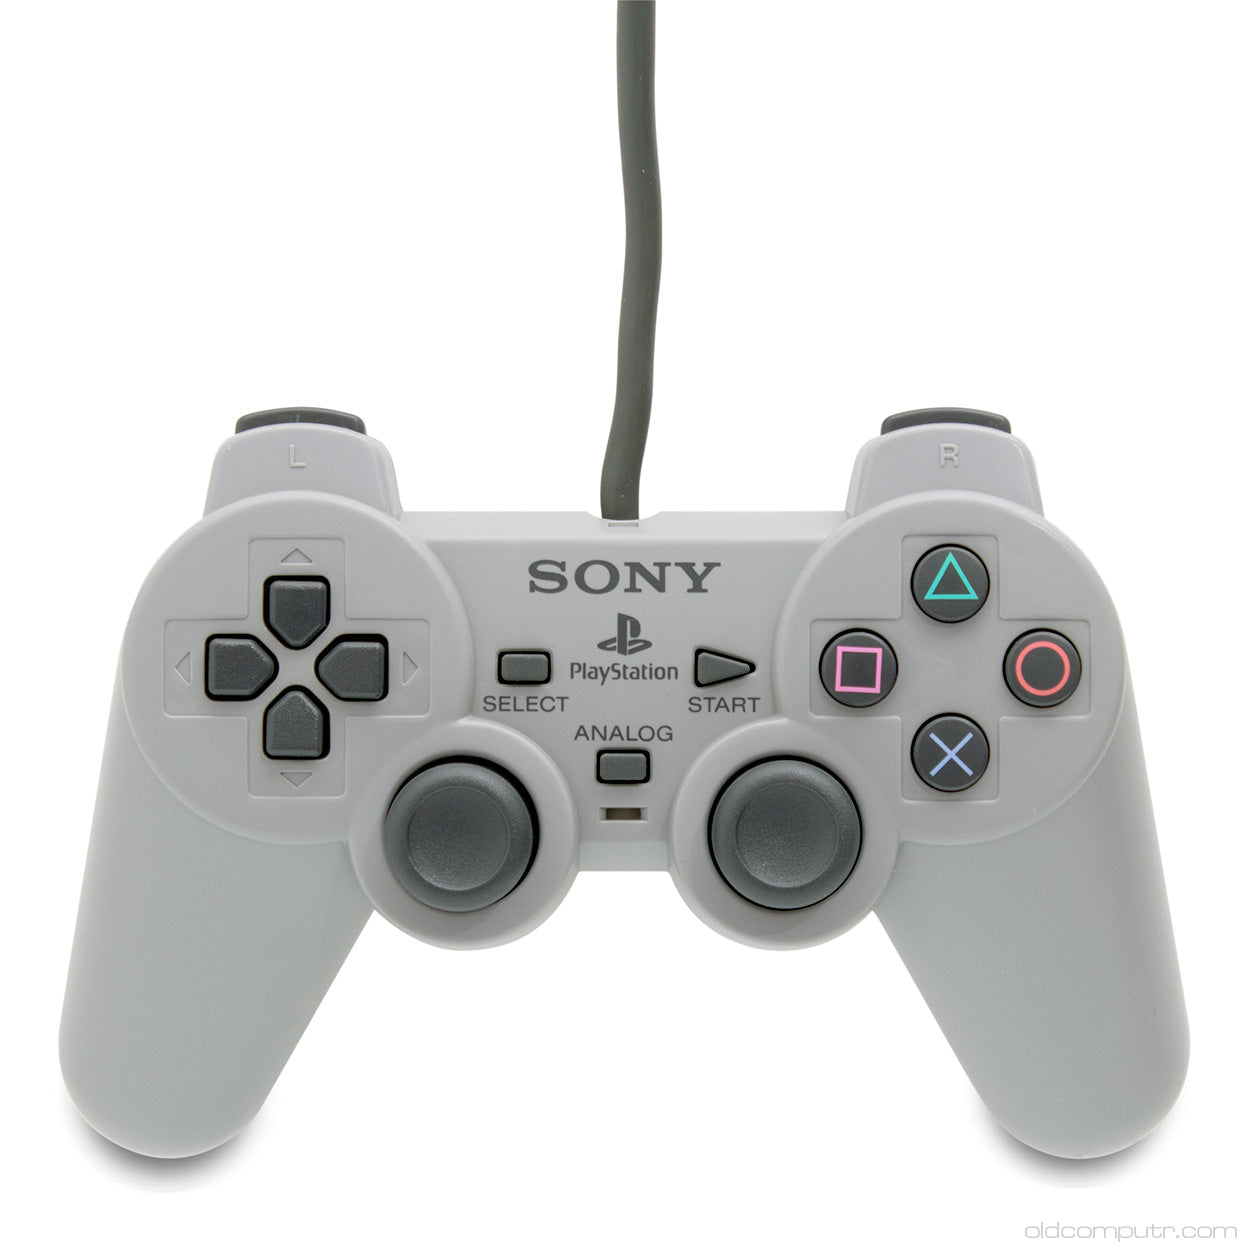 Sony Playstation Dual Analog Controller (Gray) - (PS1) PlayStation